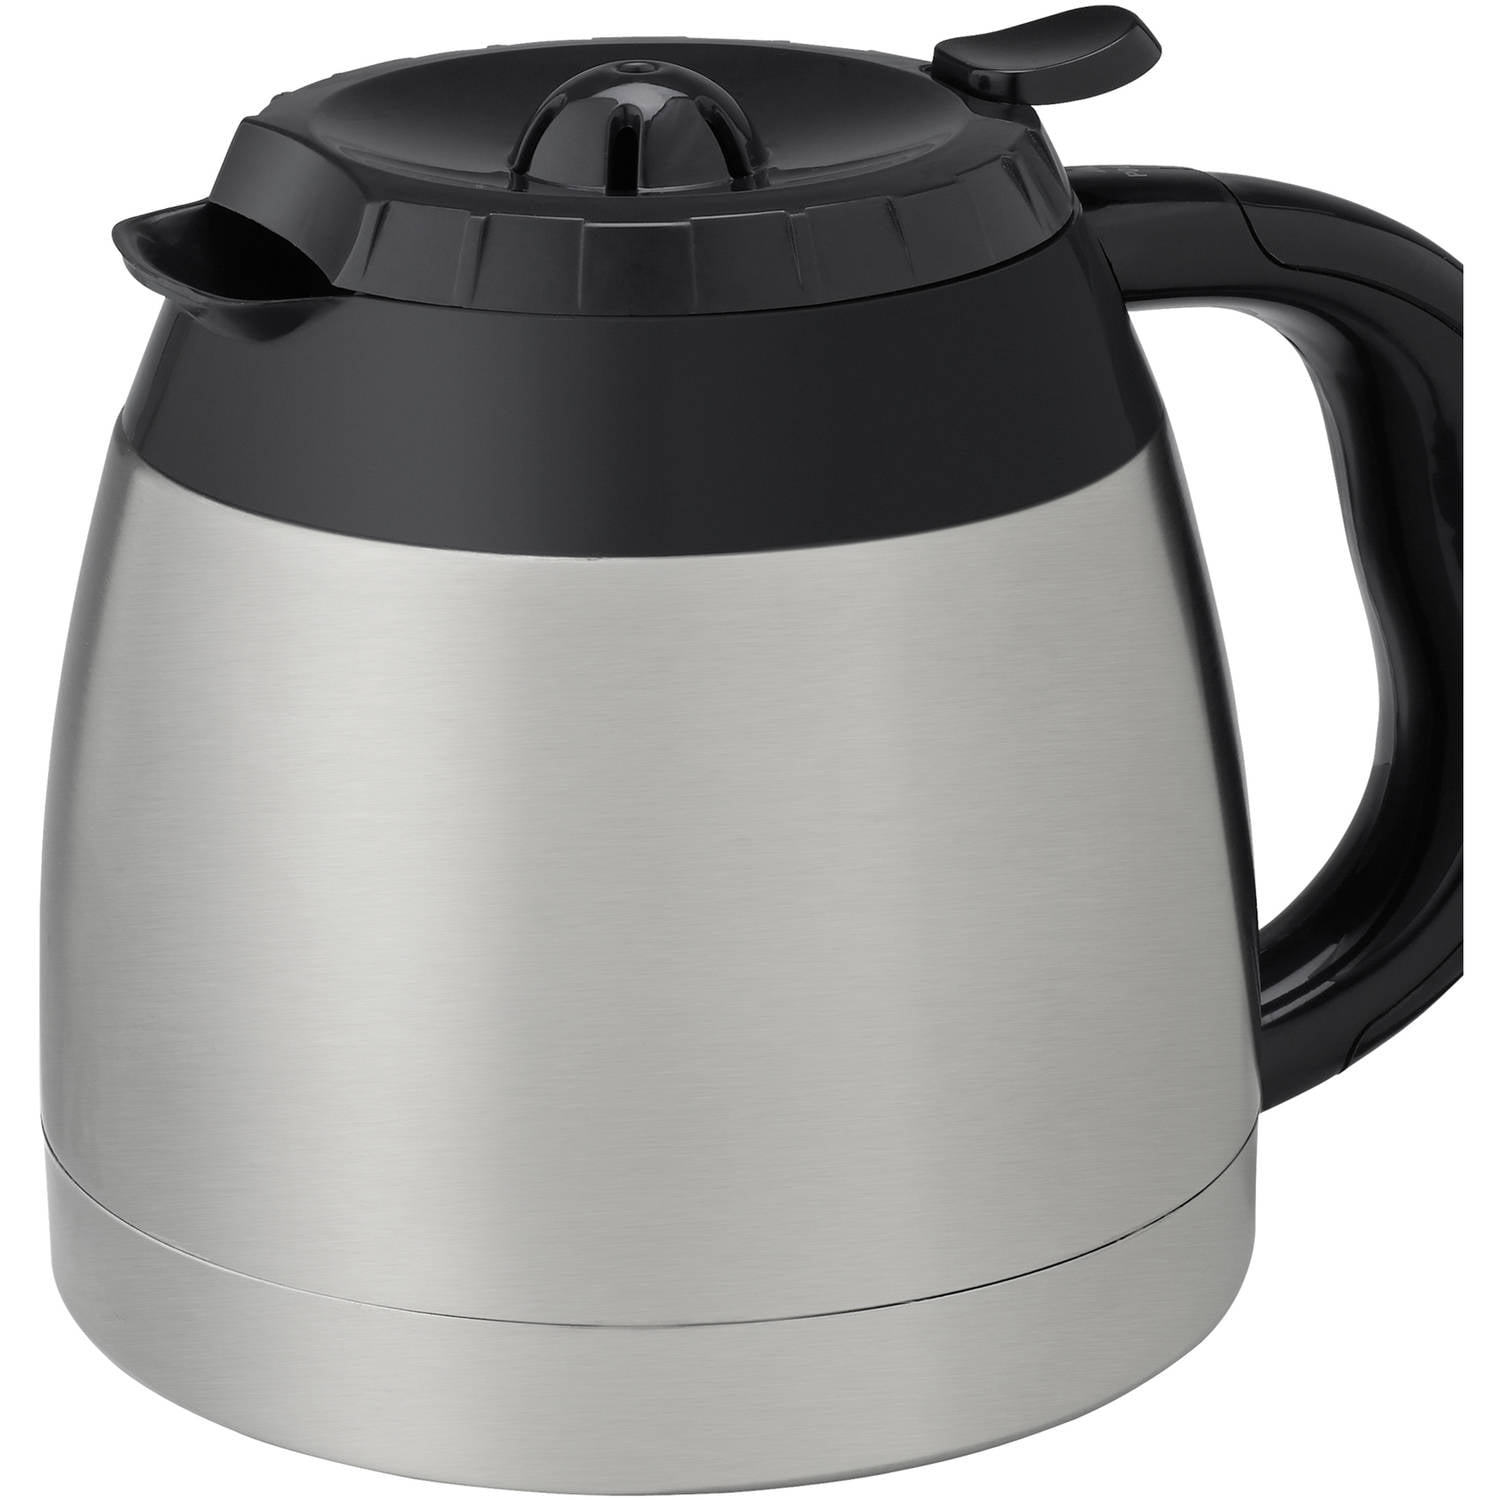 Black & Decker 8-Cup Thermal Carafe Coffee Maker DE790 Reviews –